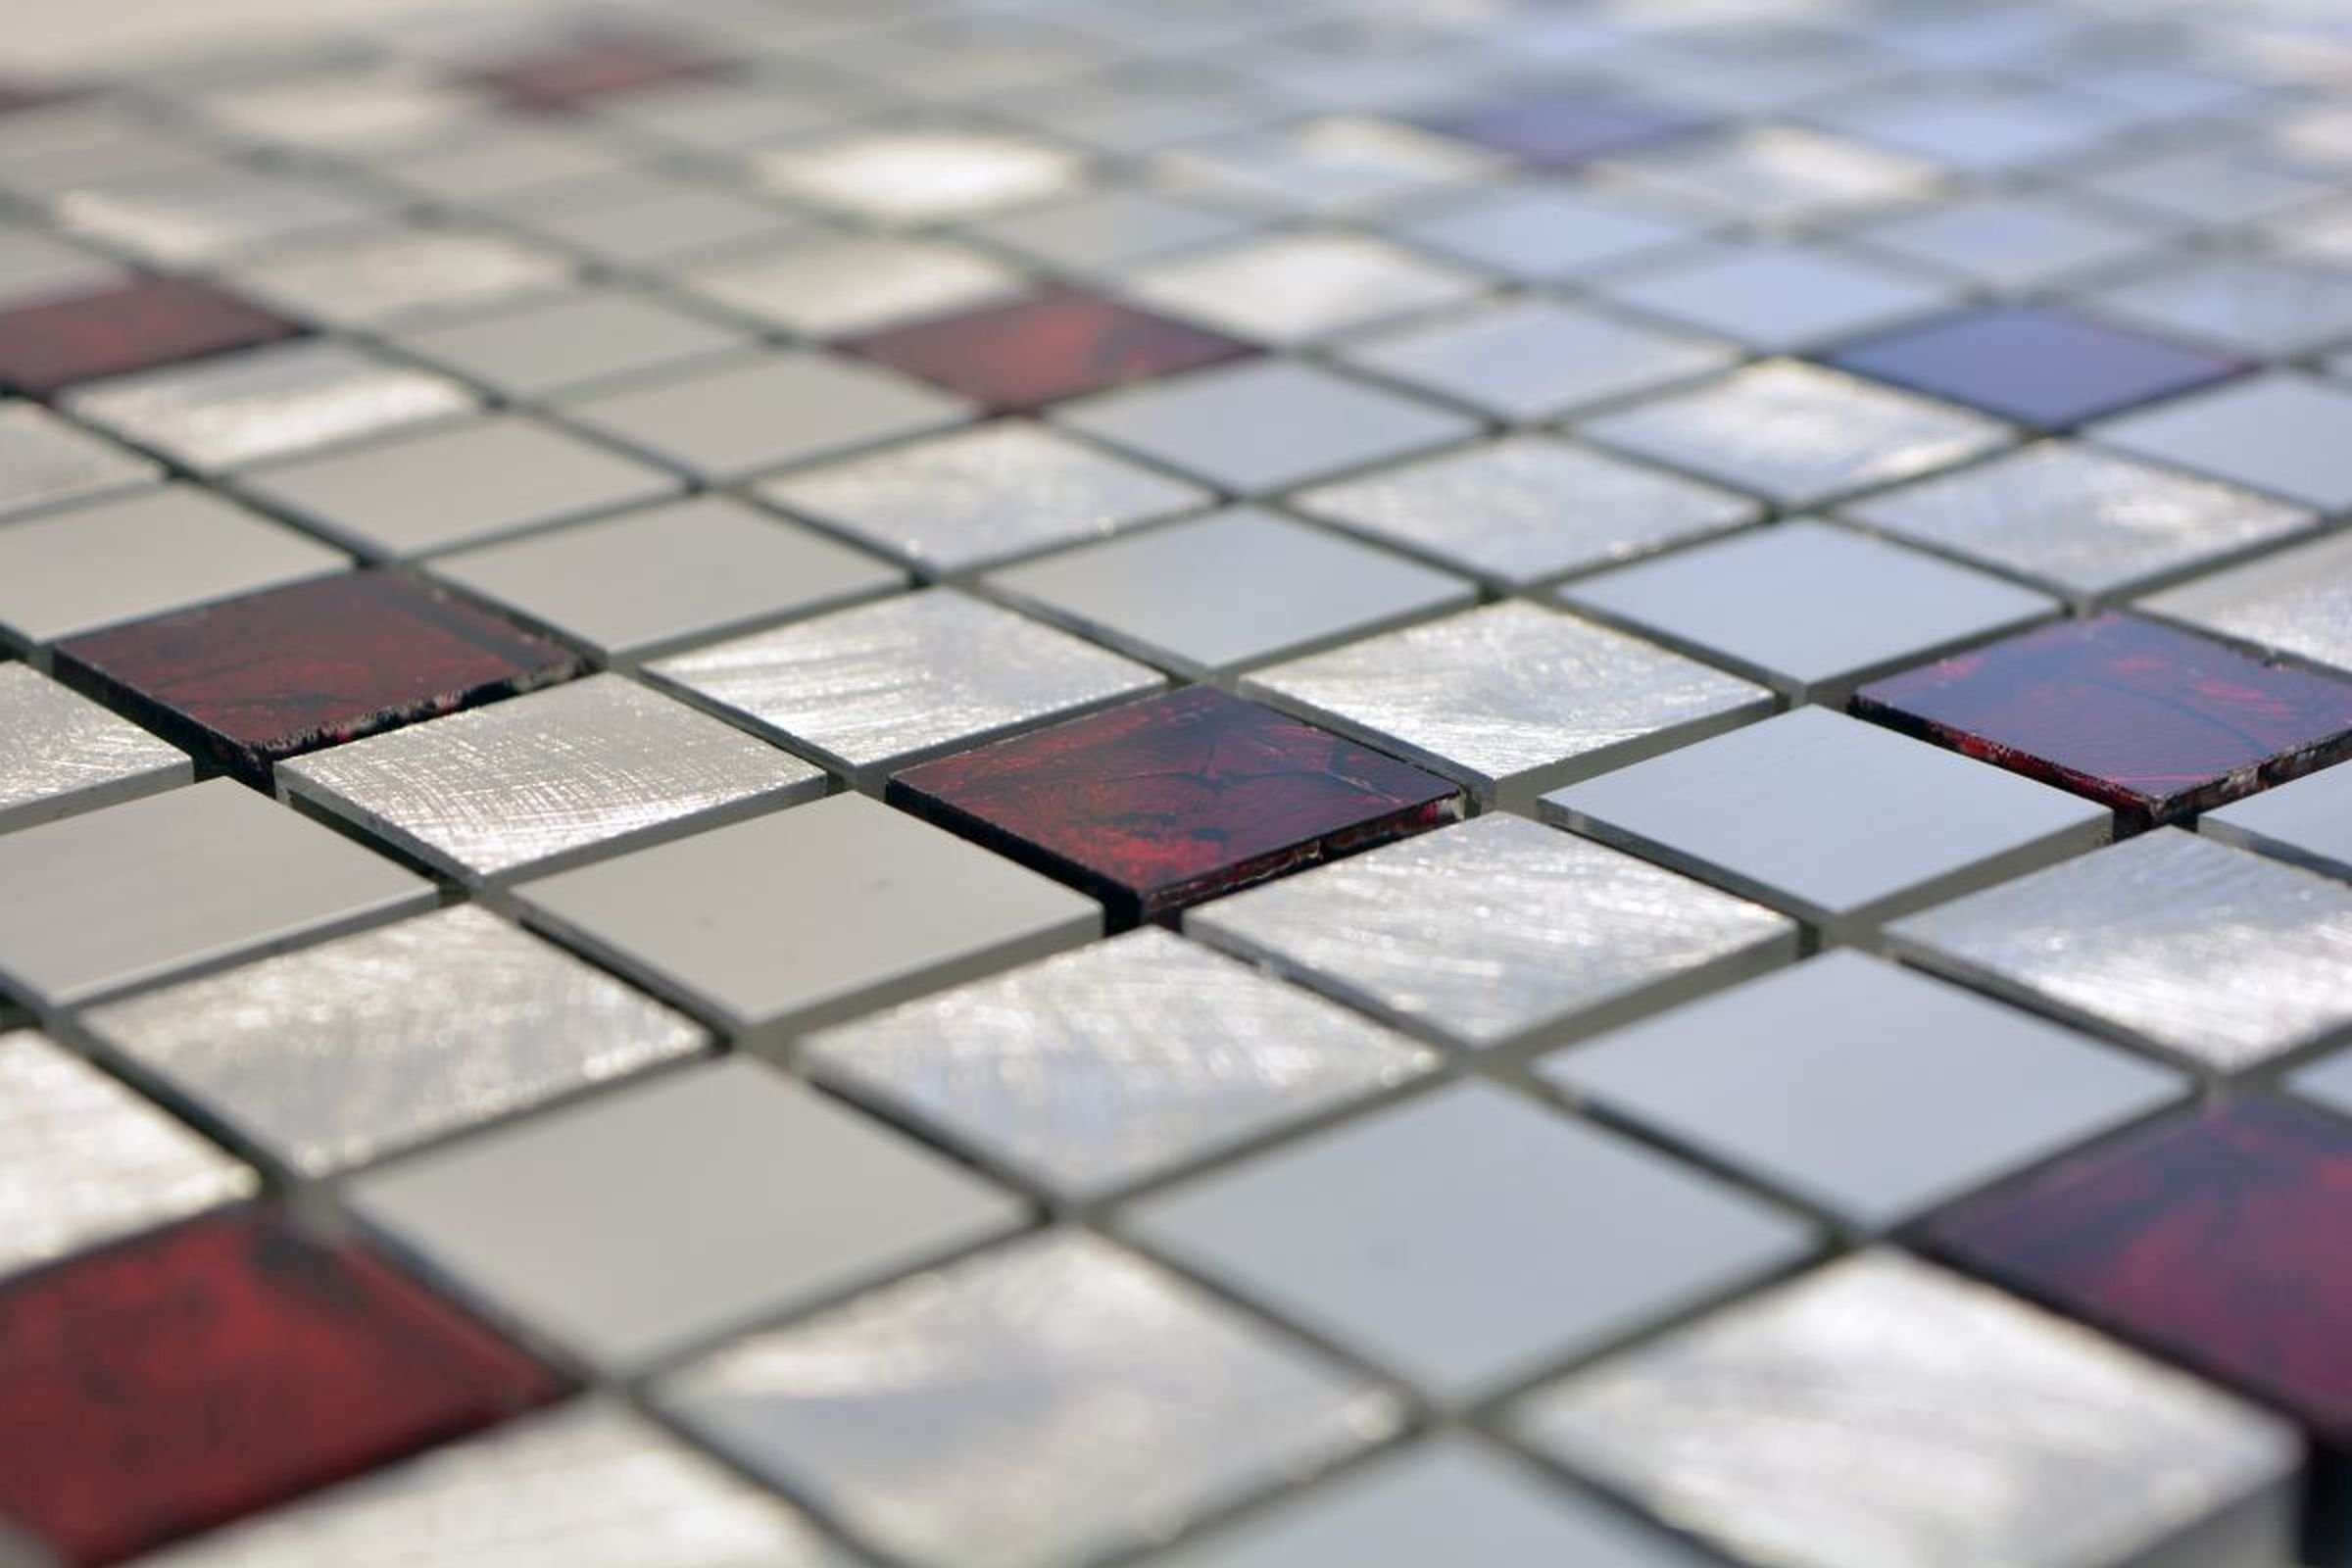 Mosaikfliesen silber Mosaik rot Fliesenspiegel Mosani Aluminium Glasmosaik Fliese